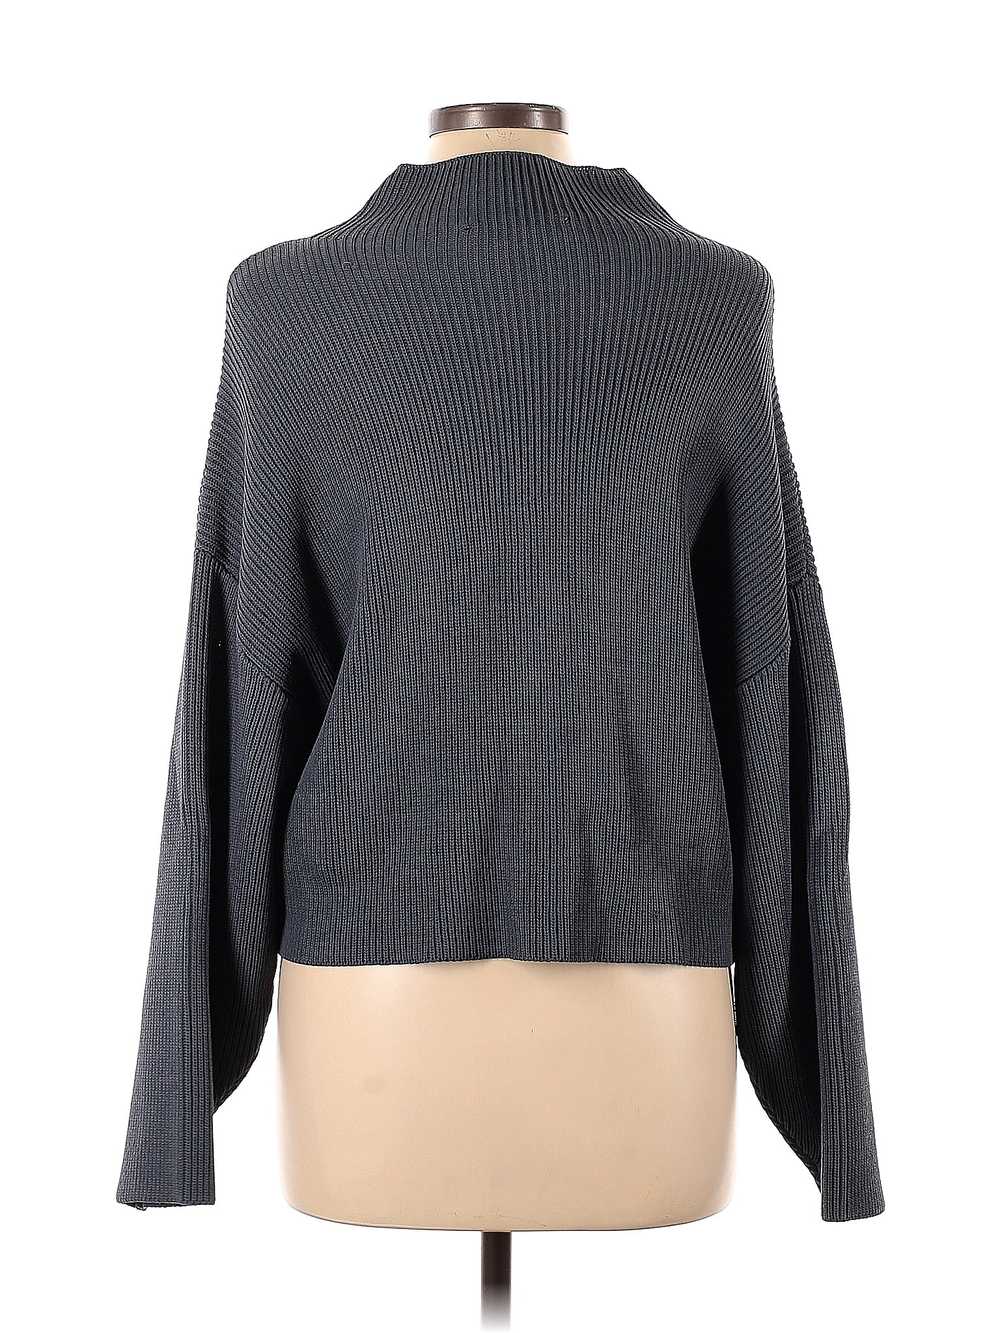 Zara Women Gray Pullover Sweater L - image 2